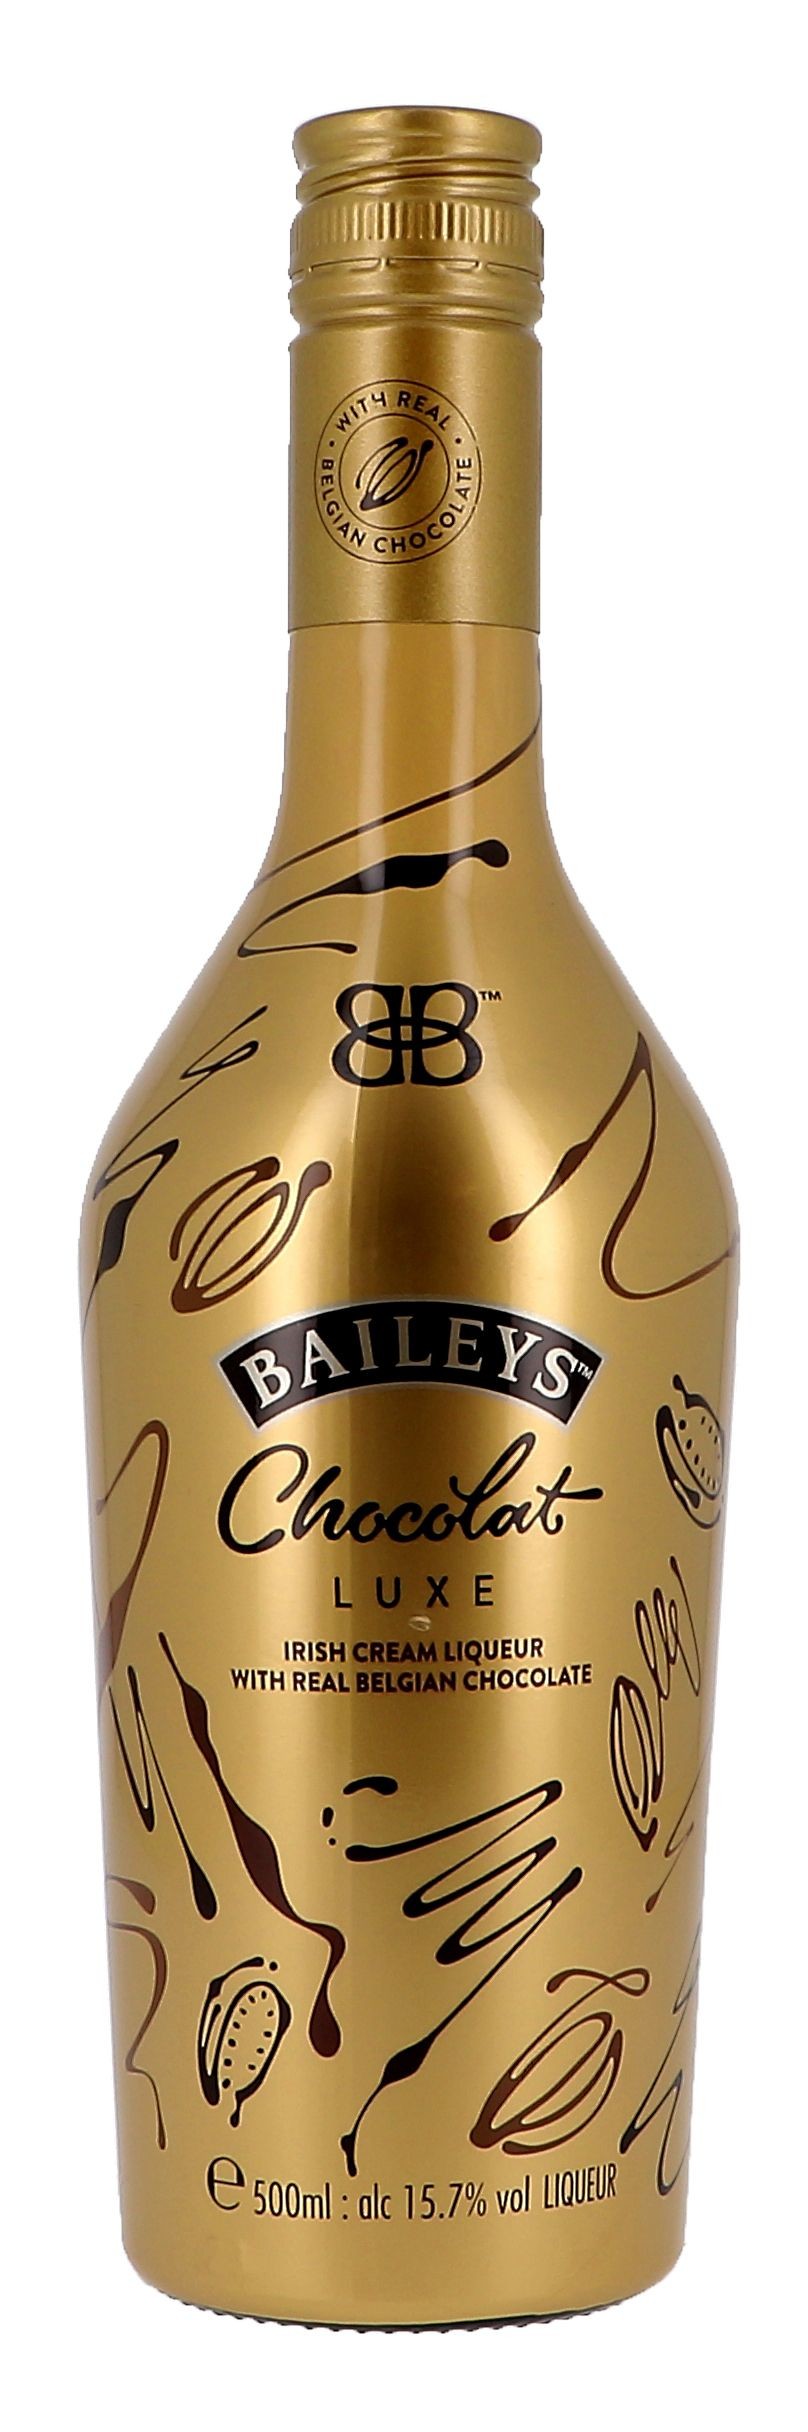 Baileys Chocolat luxe 50 cl 15,7%